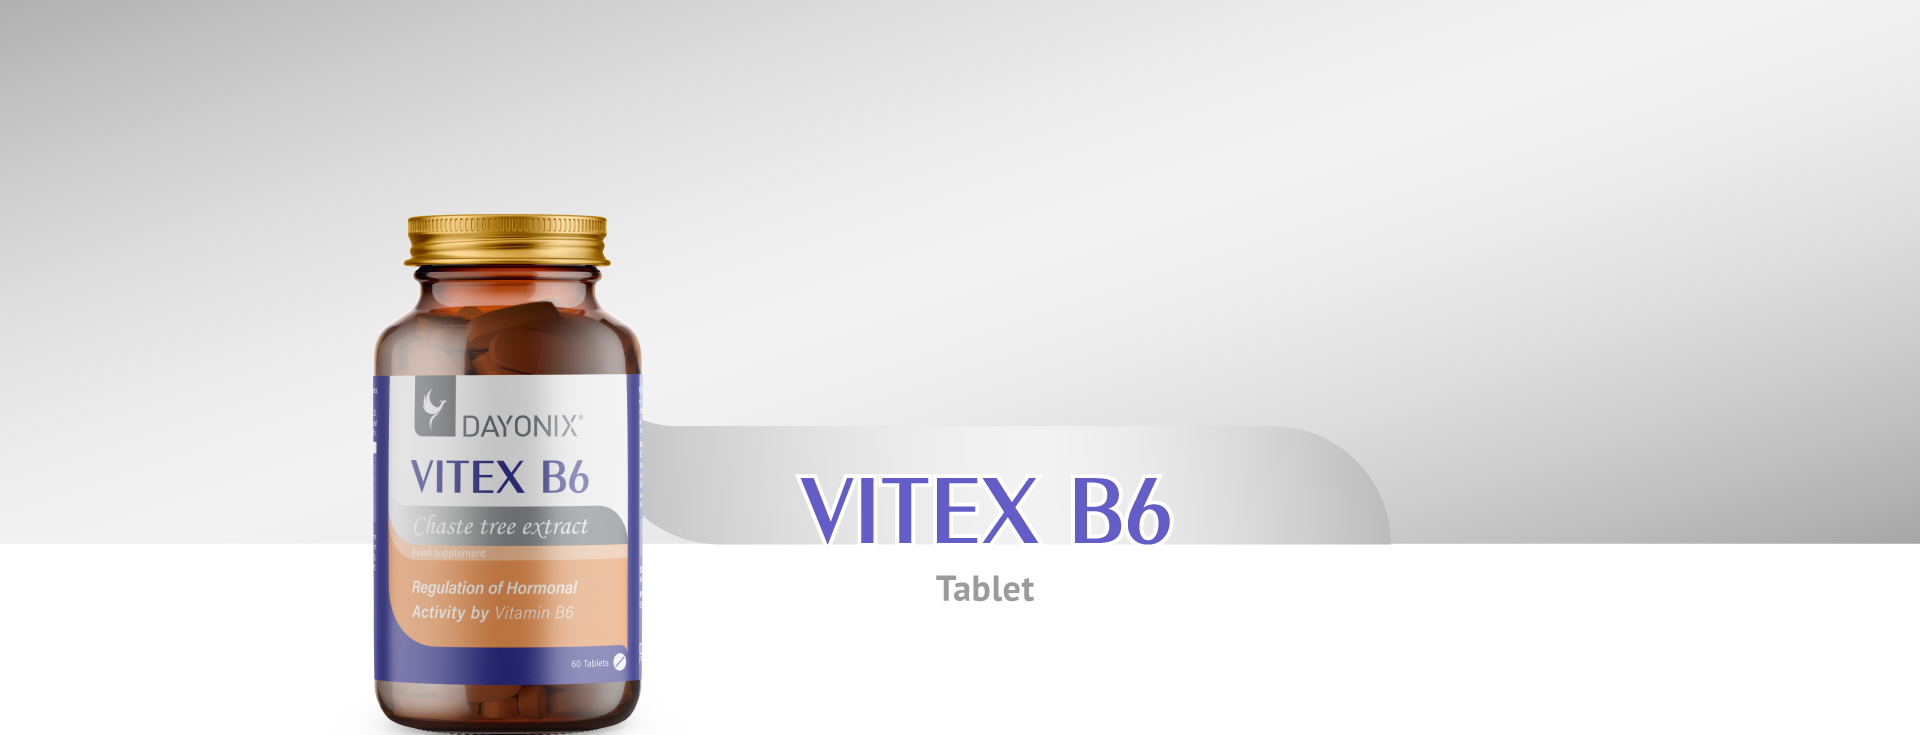 Vitex-B6-product-banner